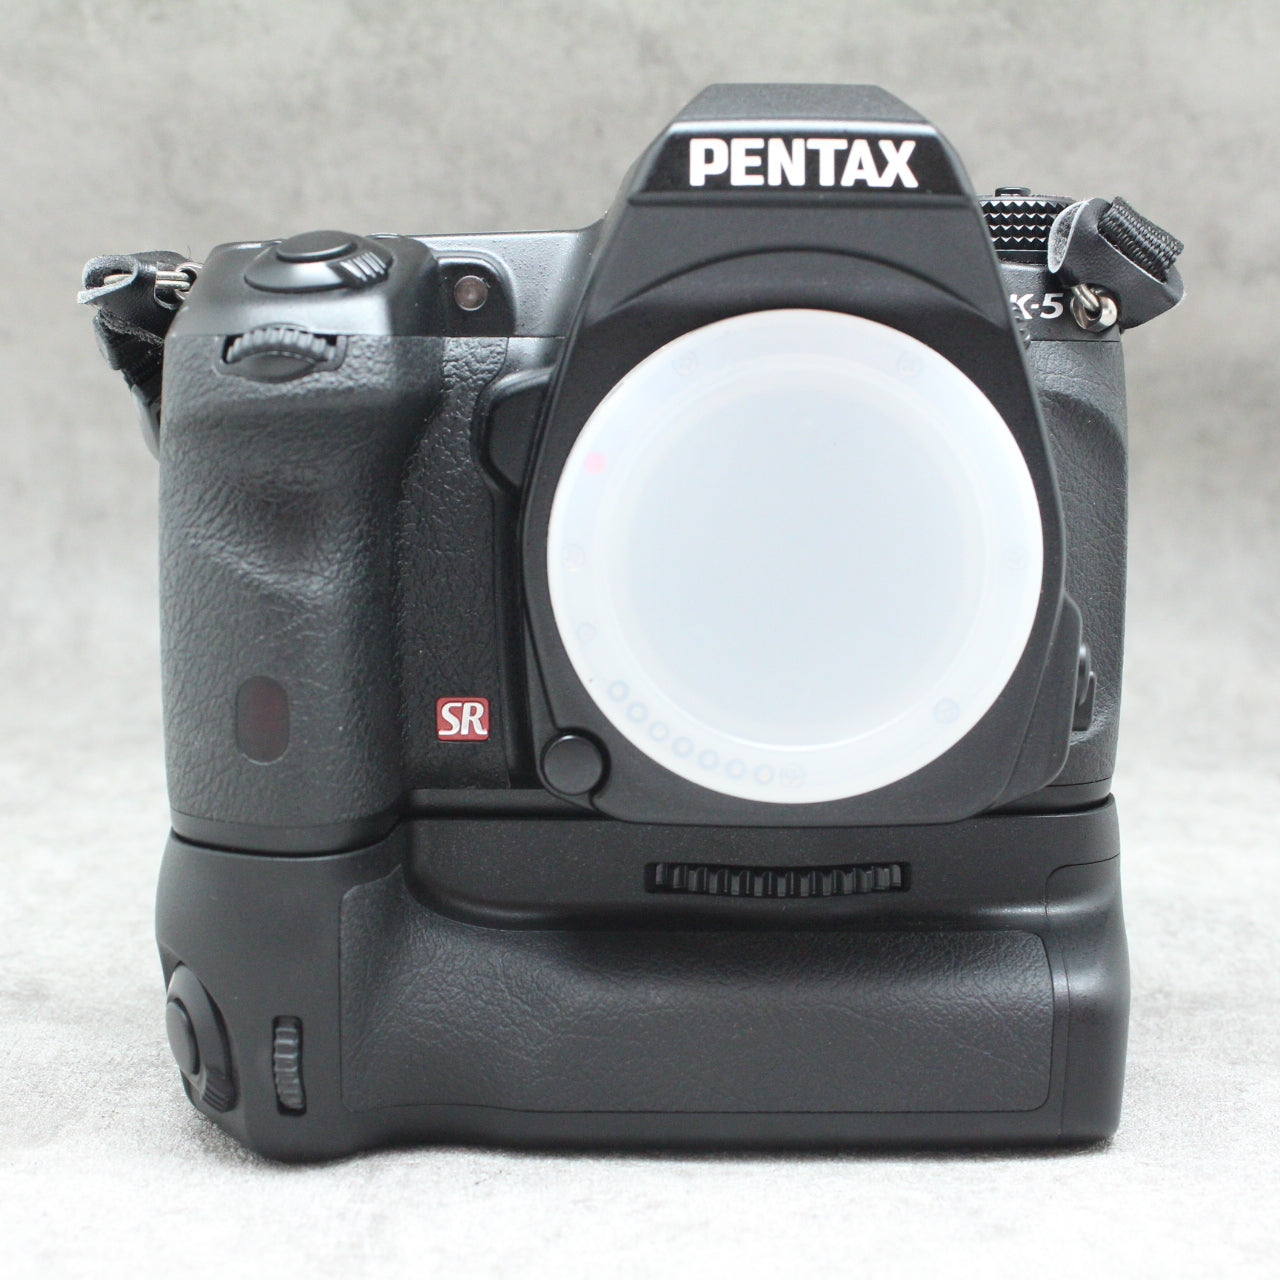 PENTAX デジタル一眼レフカメラ K-5 18-135レンズキット K-5LK18-135WR - 1